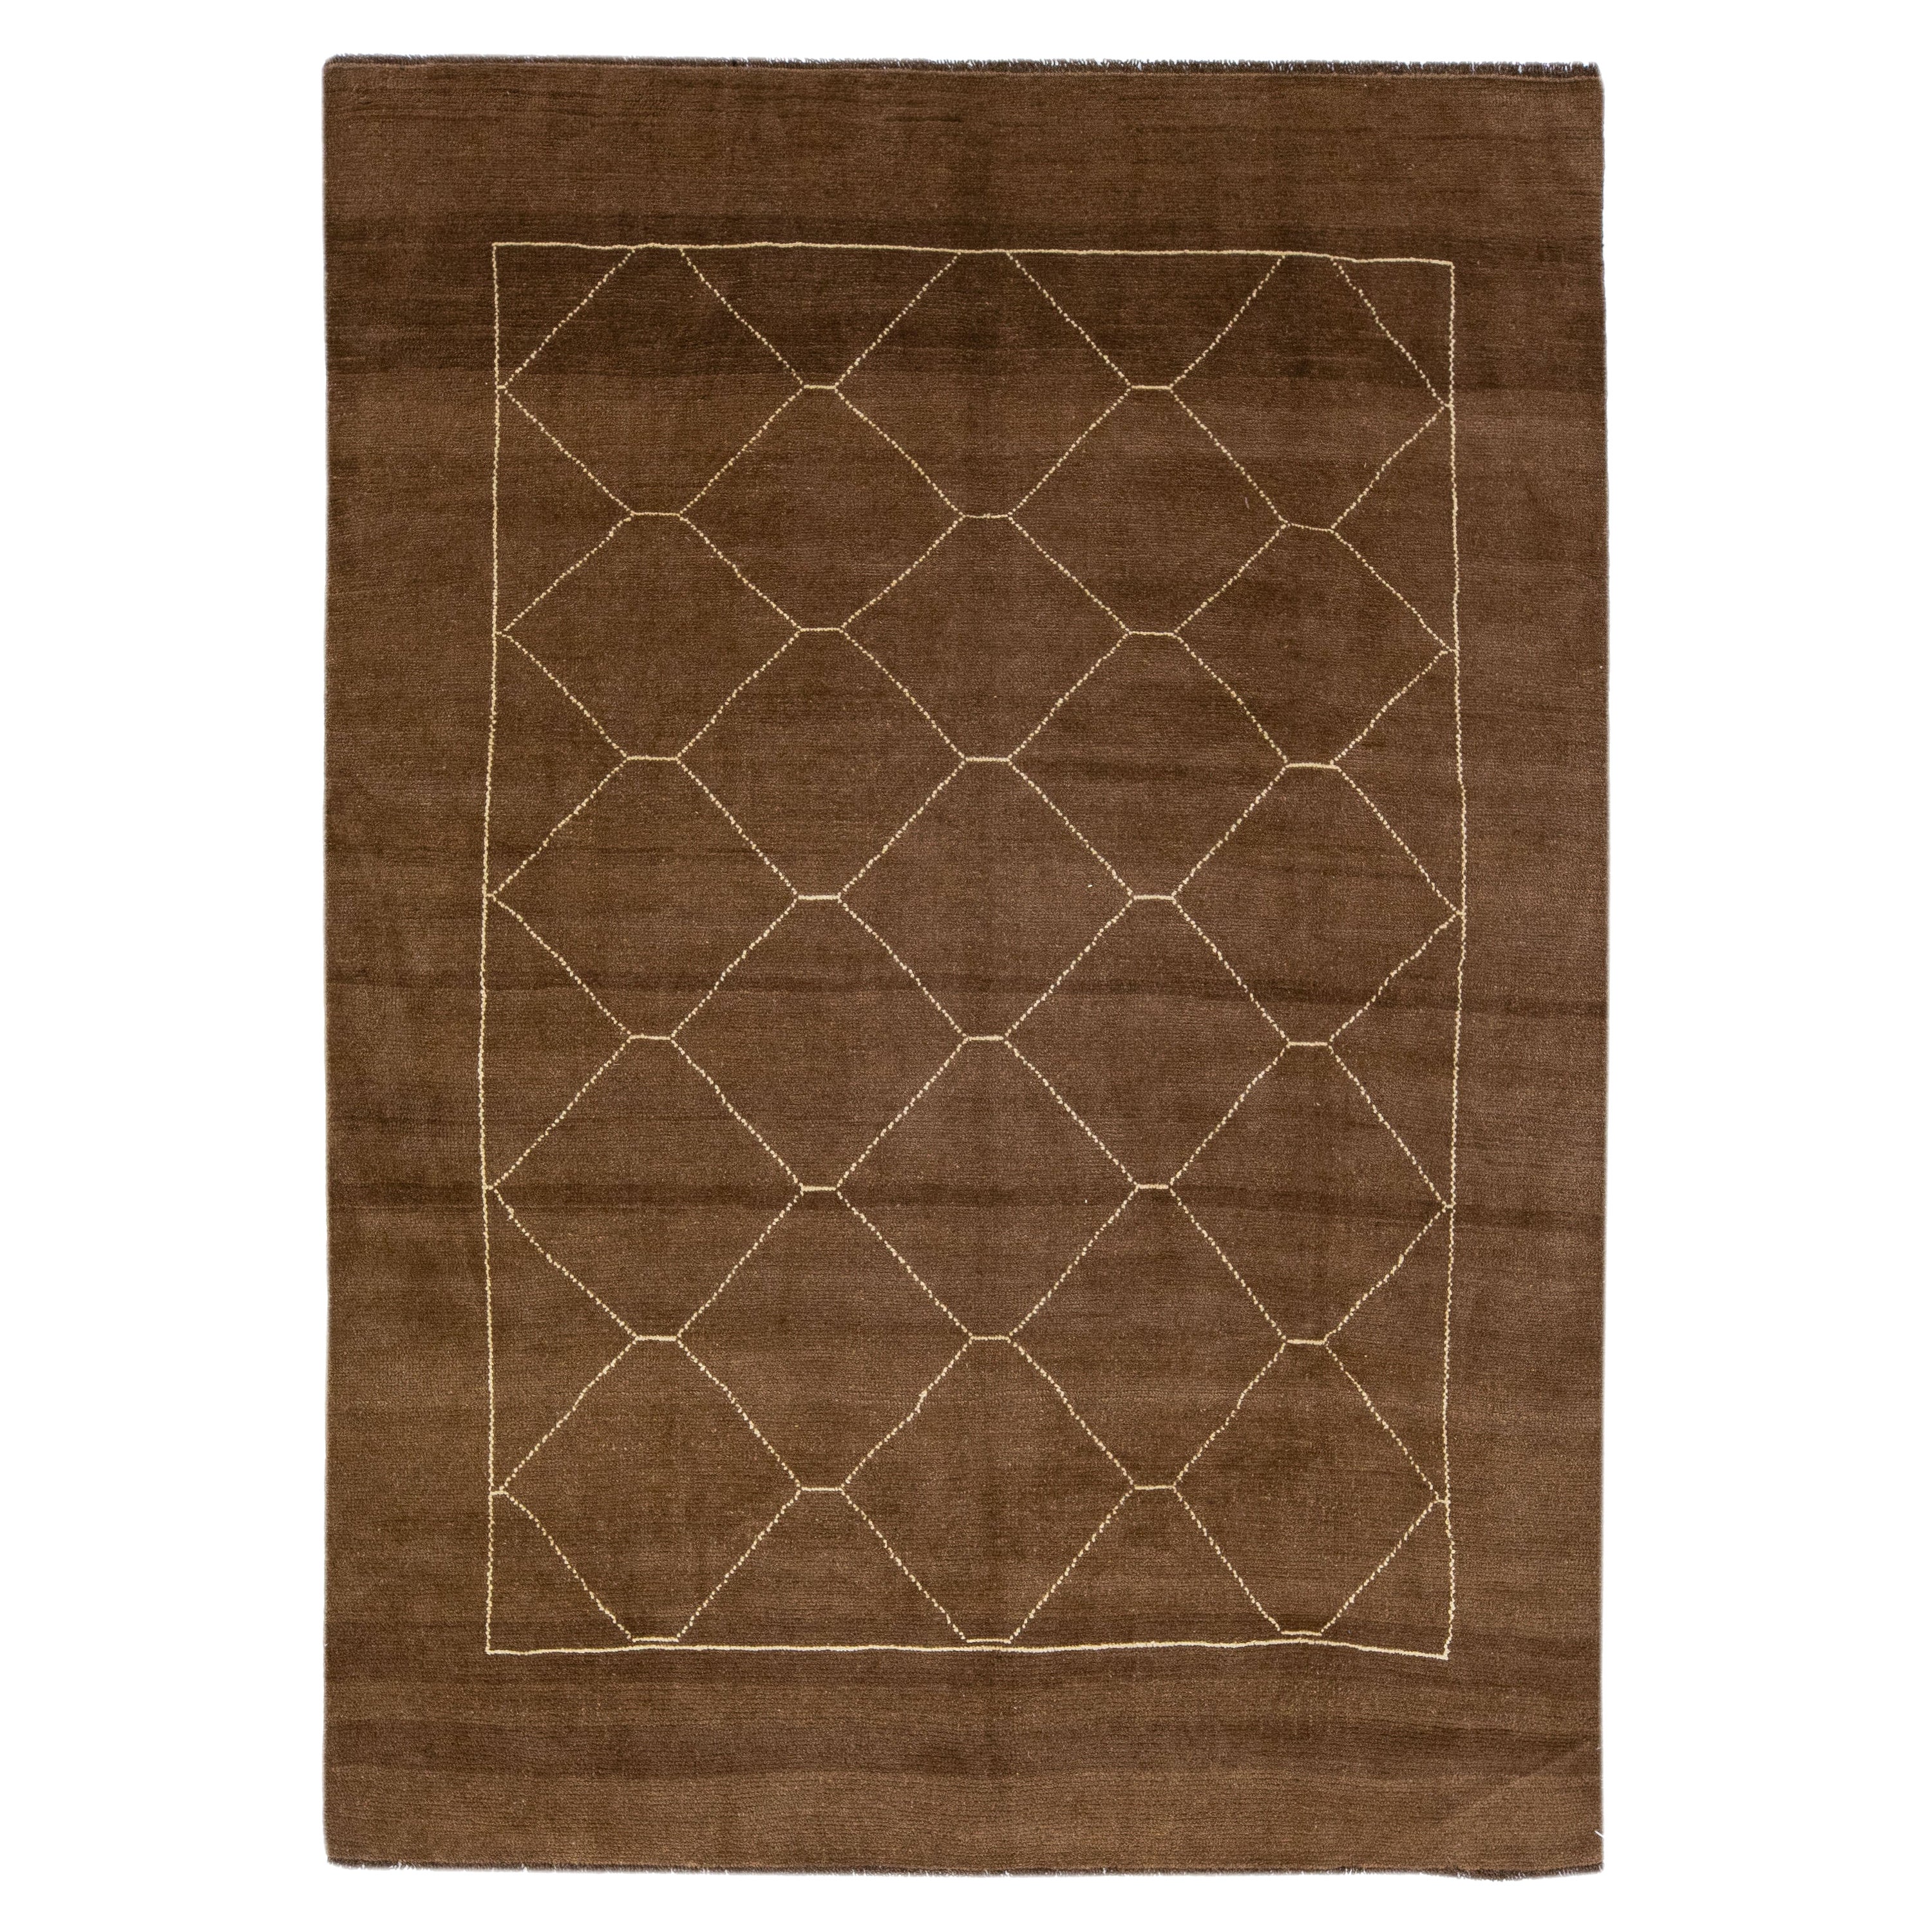 Brown Modern Moroccan Style Handmade Wool Rug with Geometric Motif by Apadana